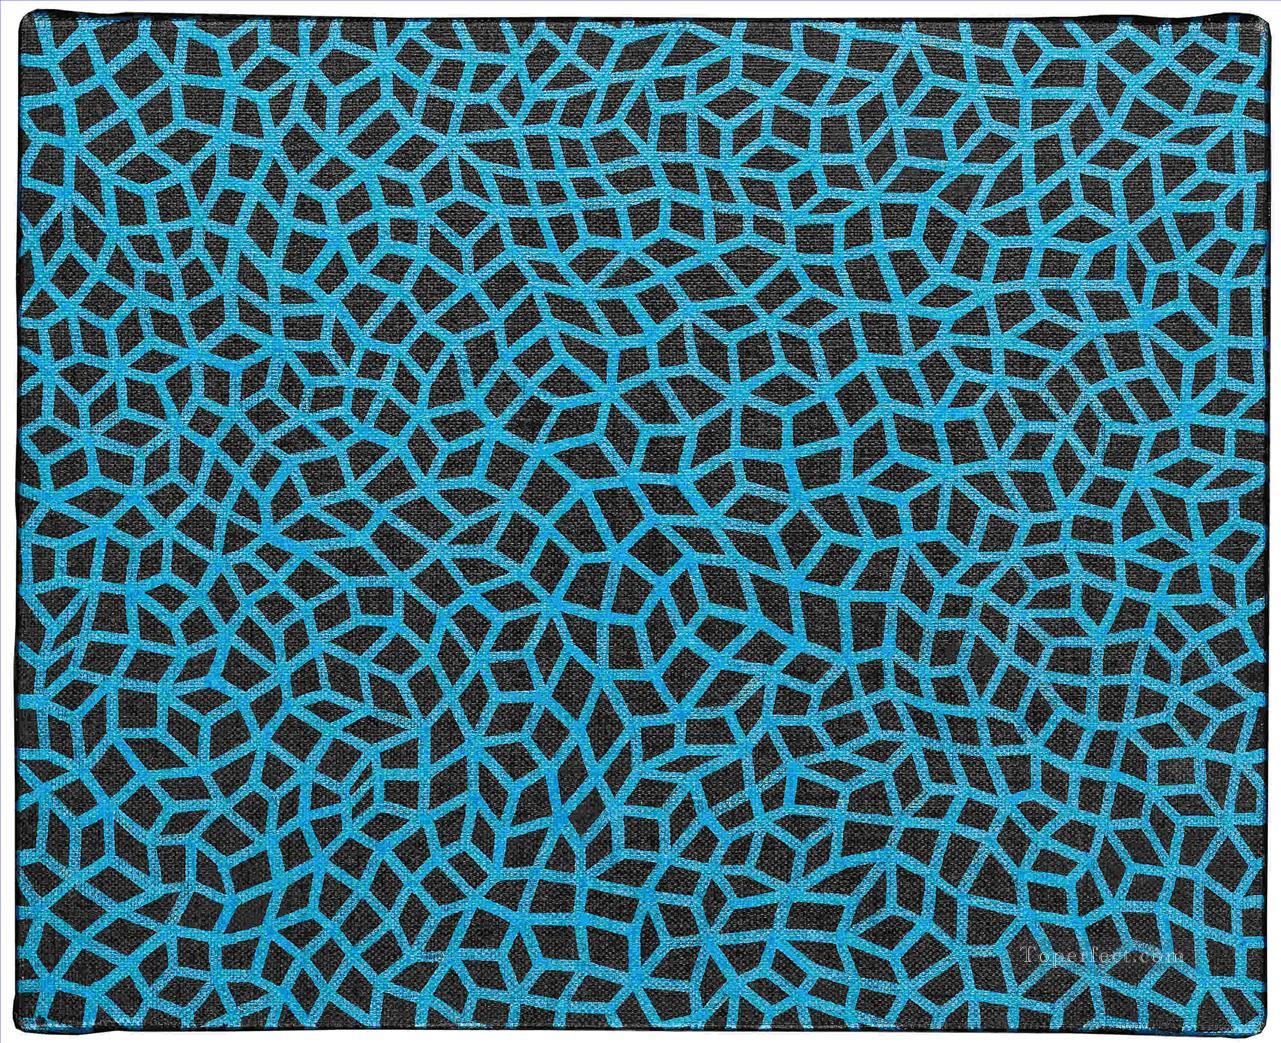 Infinity Nets blue Yayoi Kusama Pop art minimalism feminist Oil Paintings